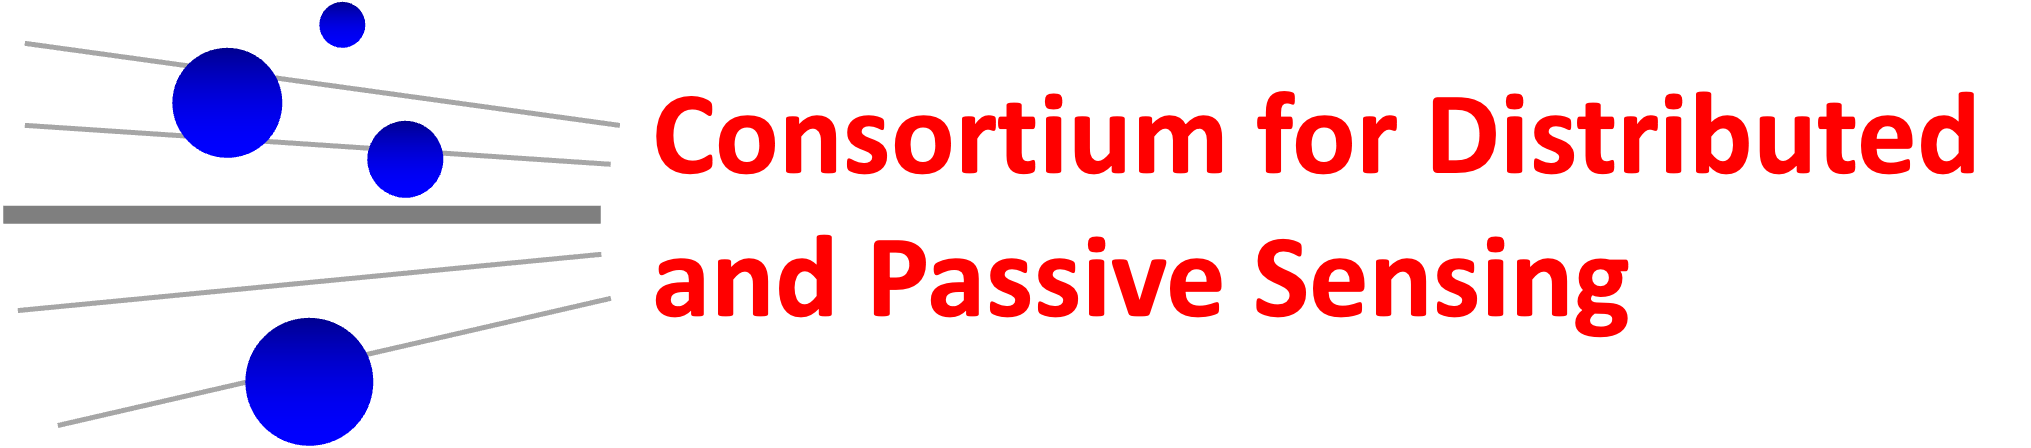 Consortium for Distributed and Passive Sensing